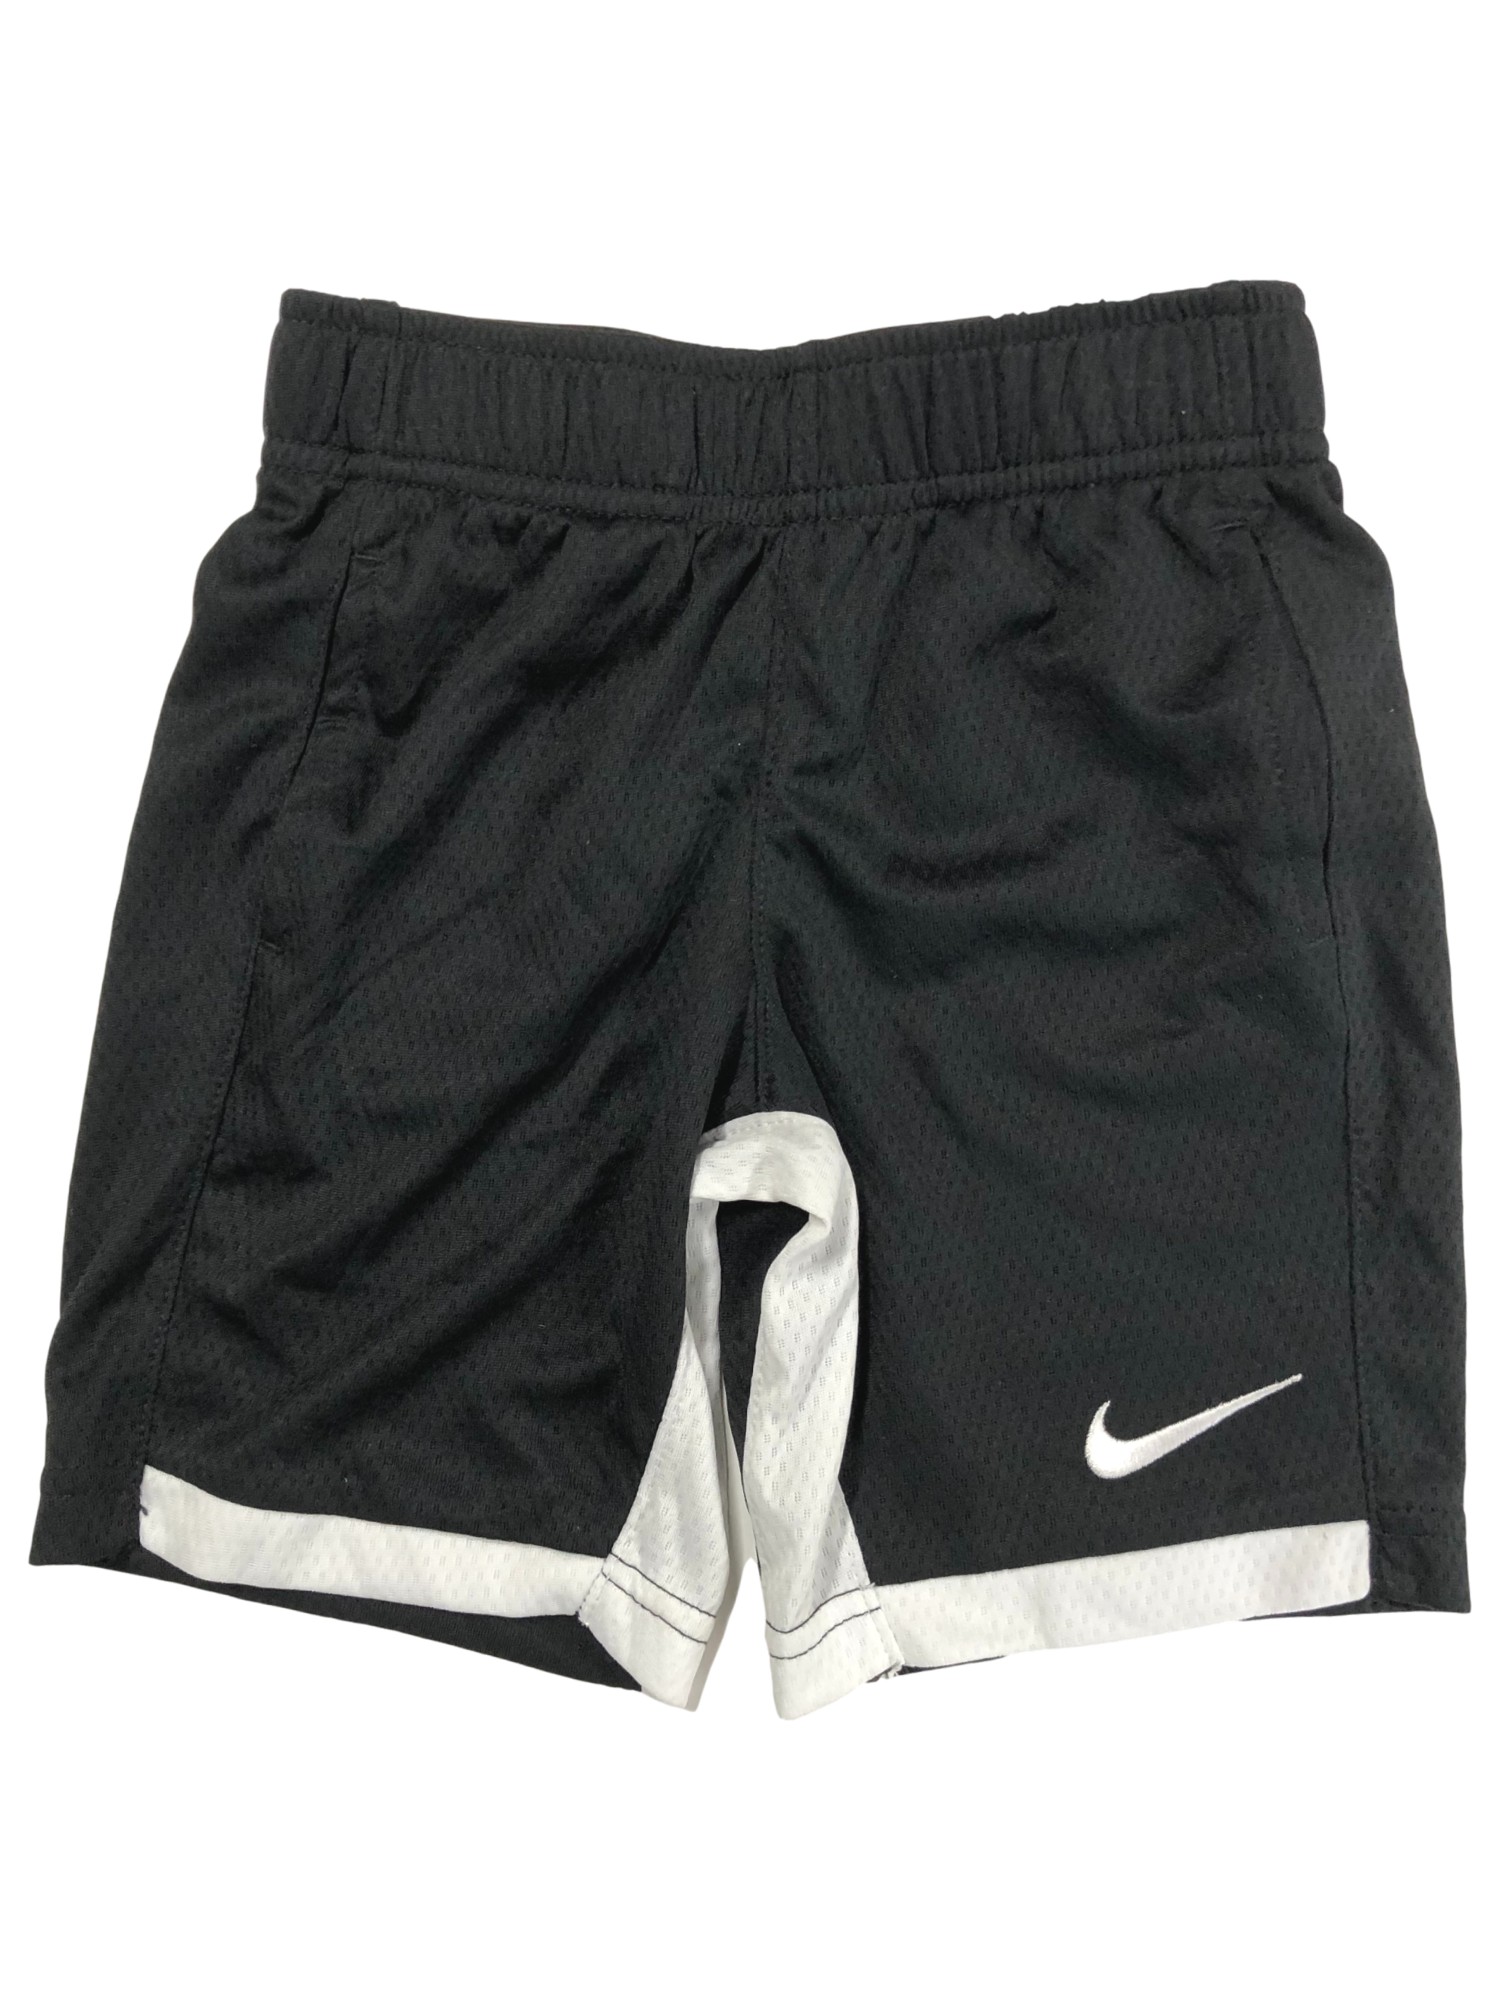 Nike Dry Toddler Boys Black & White Athletic Basketball Shorts 4T